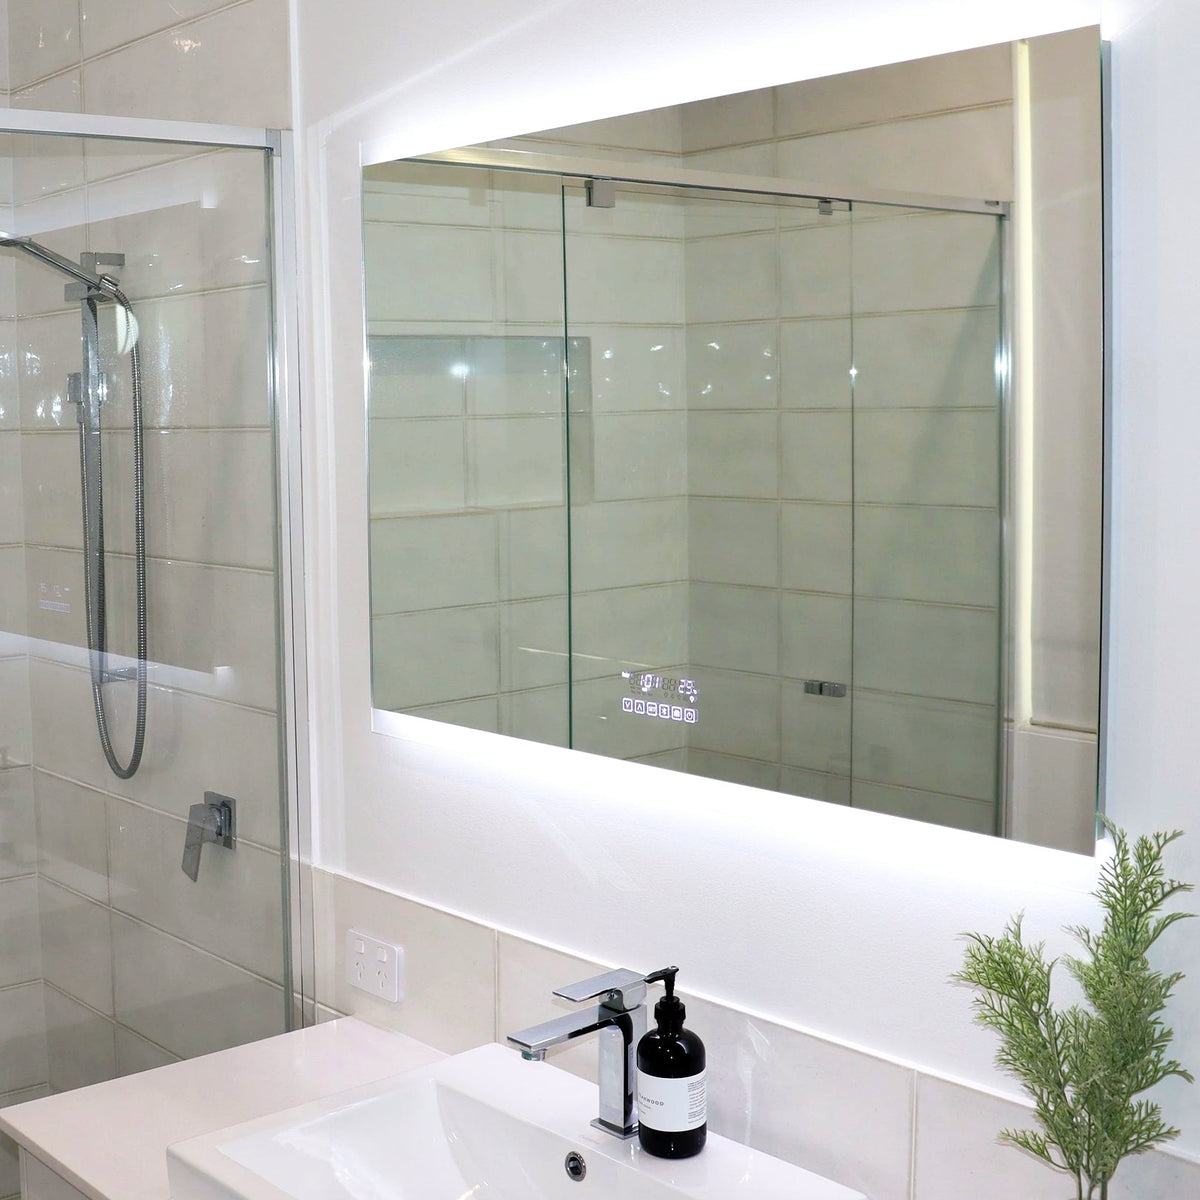 Ample Bathroom Lighting with InVogue Large Smart Backlit LED Mirror and Main Lights